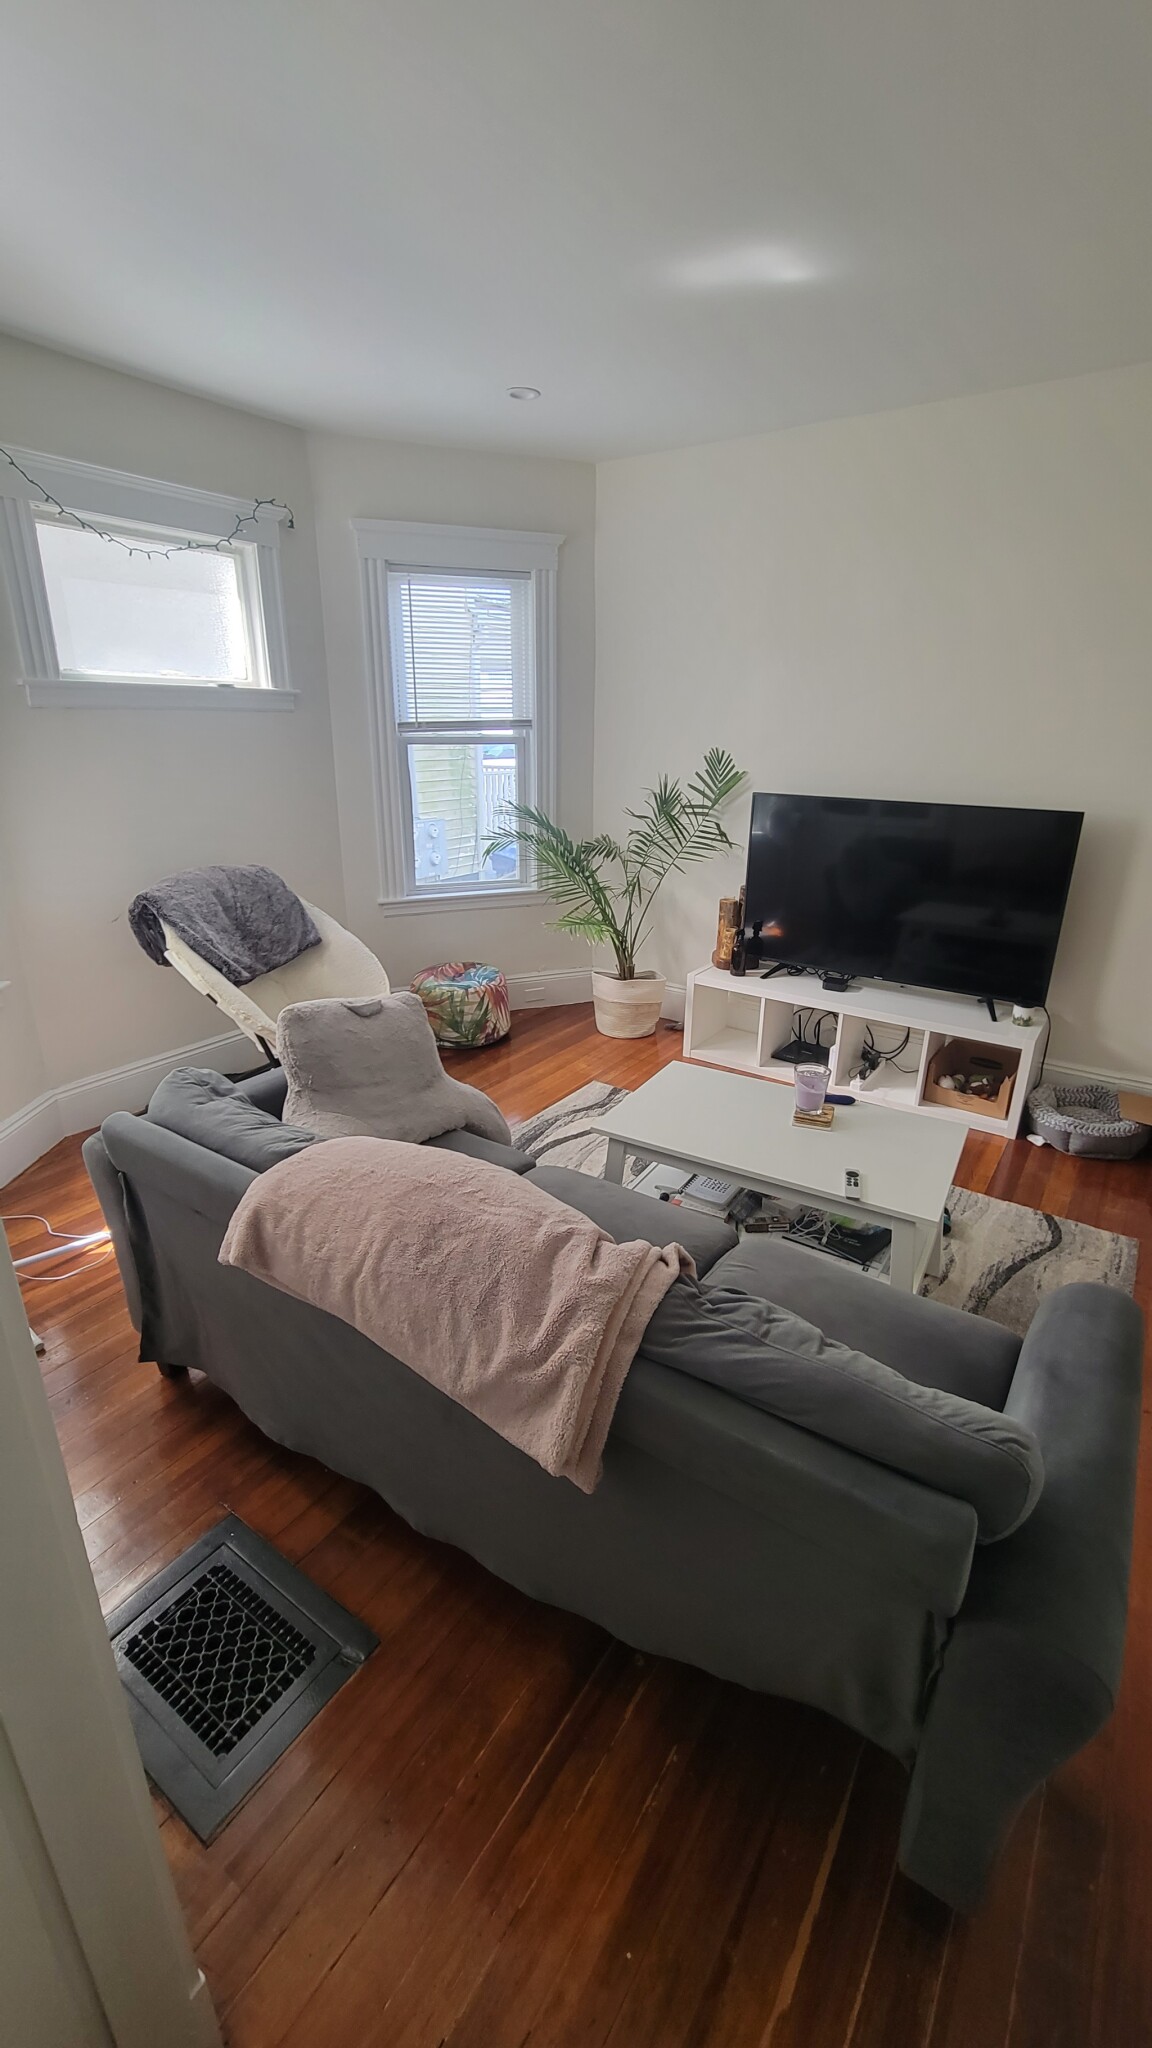 Photos of apartment on Juliette,Boston MA 02122